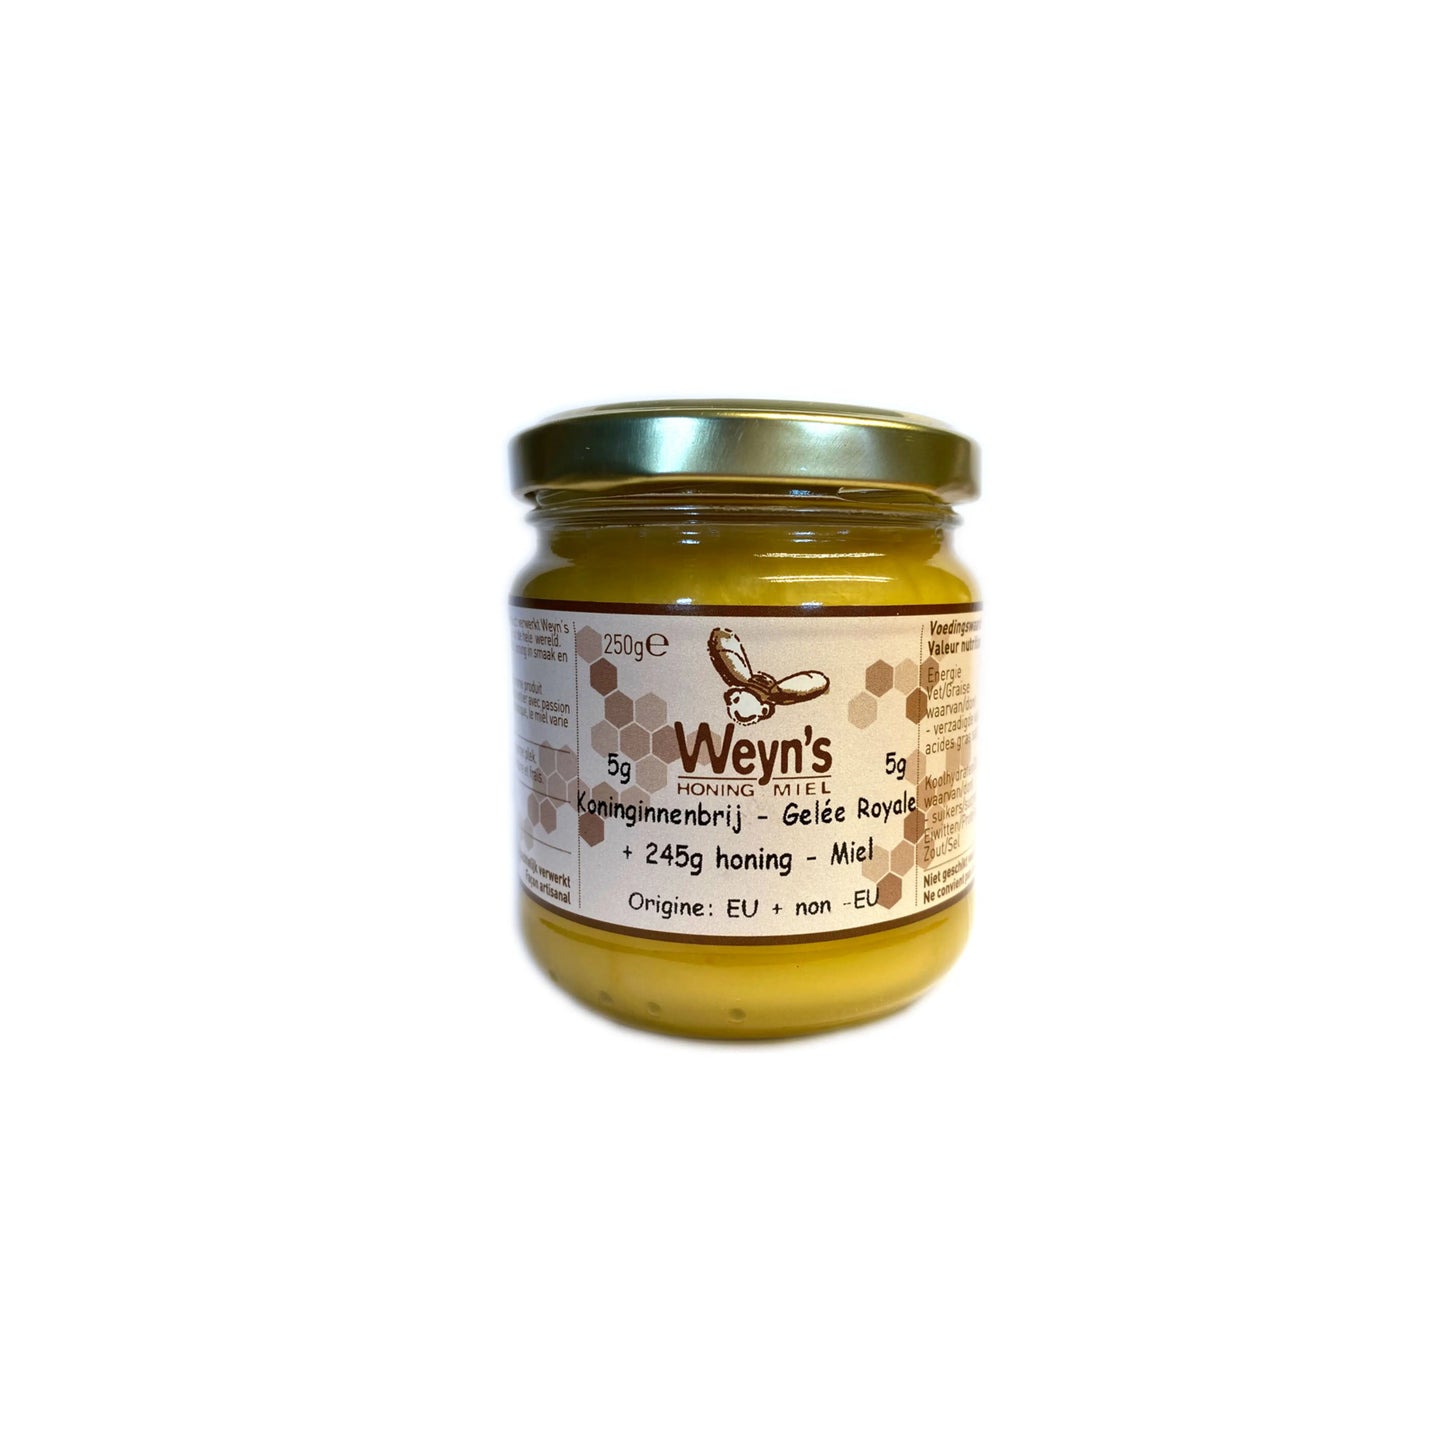 Honing met koninginnebrij (Royal Jelly) 250g Weyn's (vloeibaar)